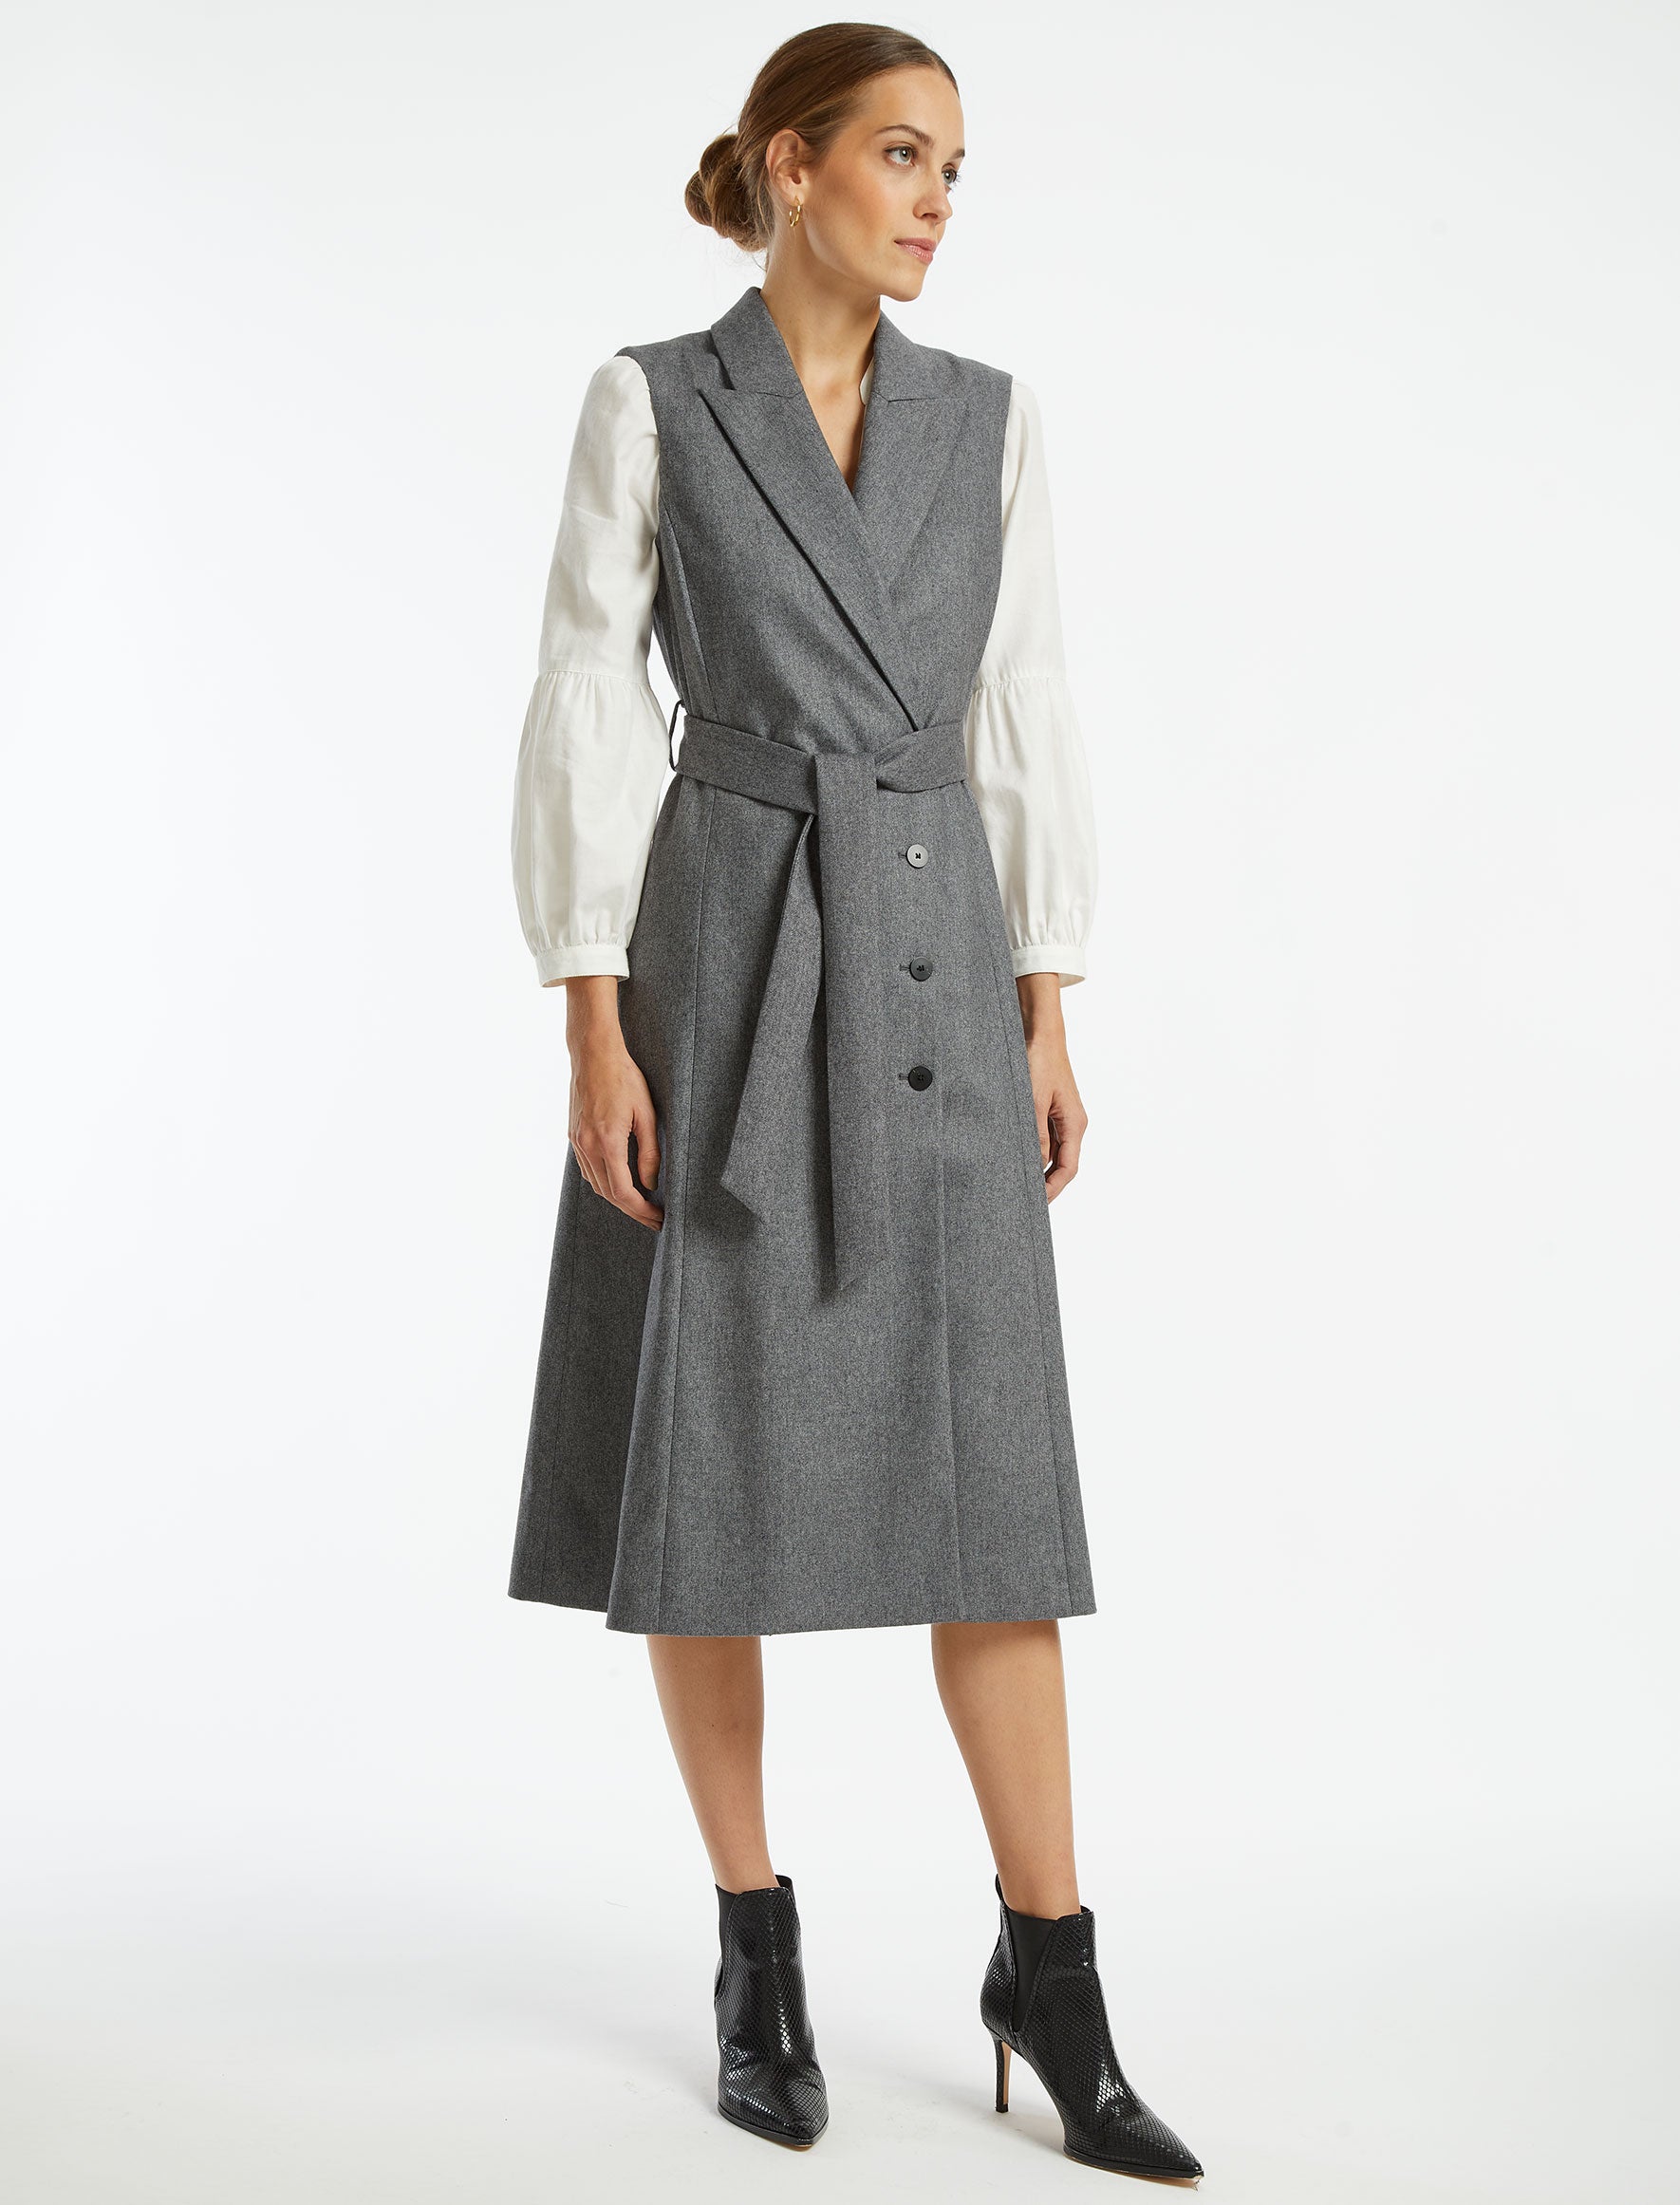 Cefinn Vanessa Sleeveless, Felted Wool Layering Coat Dress - Grey Melange